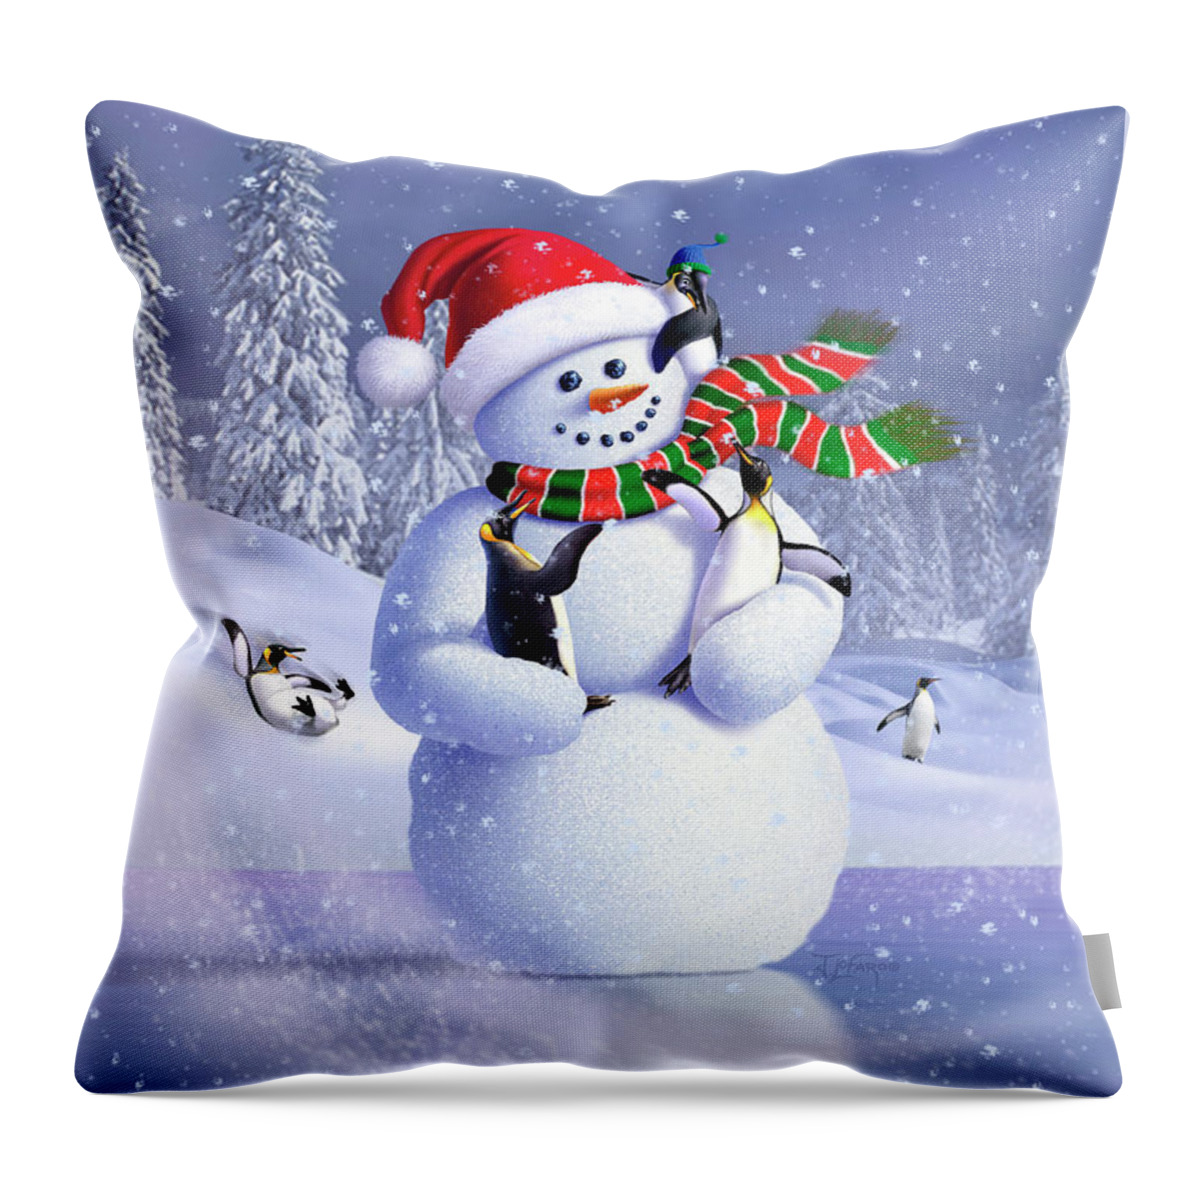 Snowman Throw Pillow featuring the digital art Snowman by Jerry LoFaro